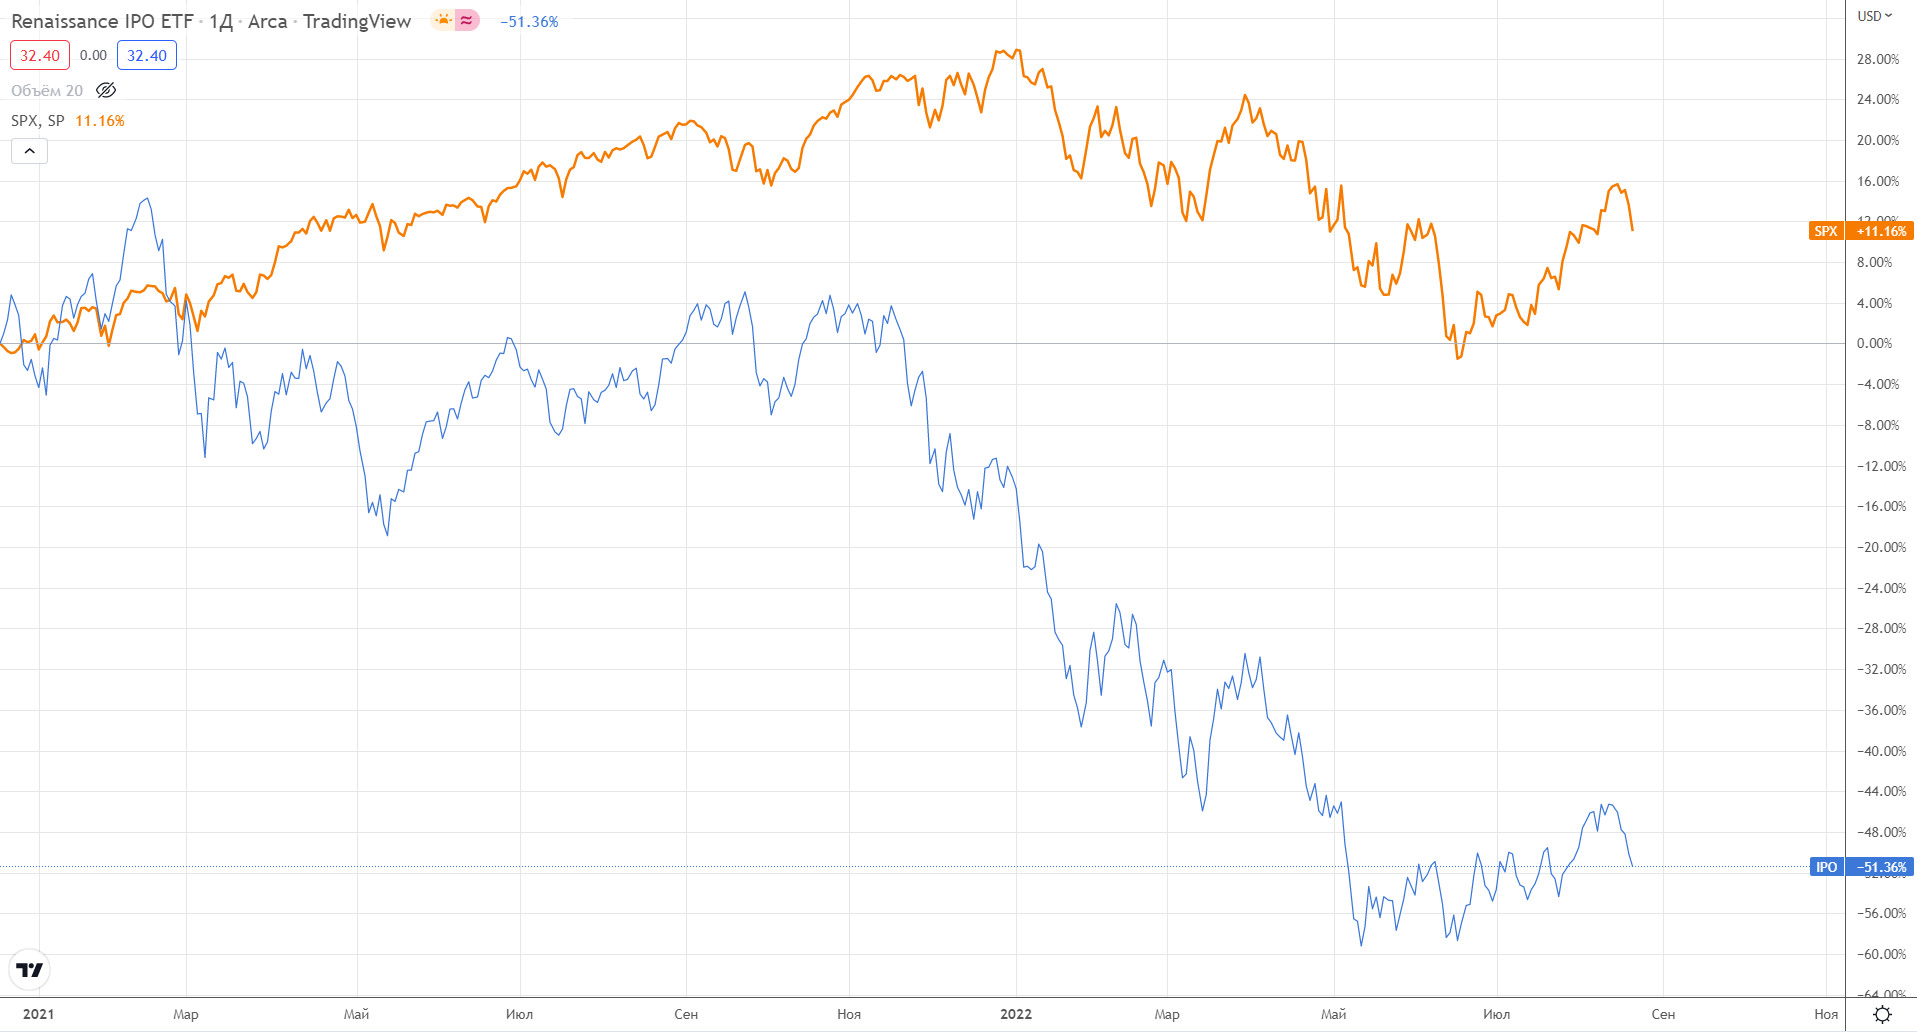 Сравнение Renaissance IPO ETF и S&P 500 за год